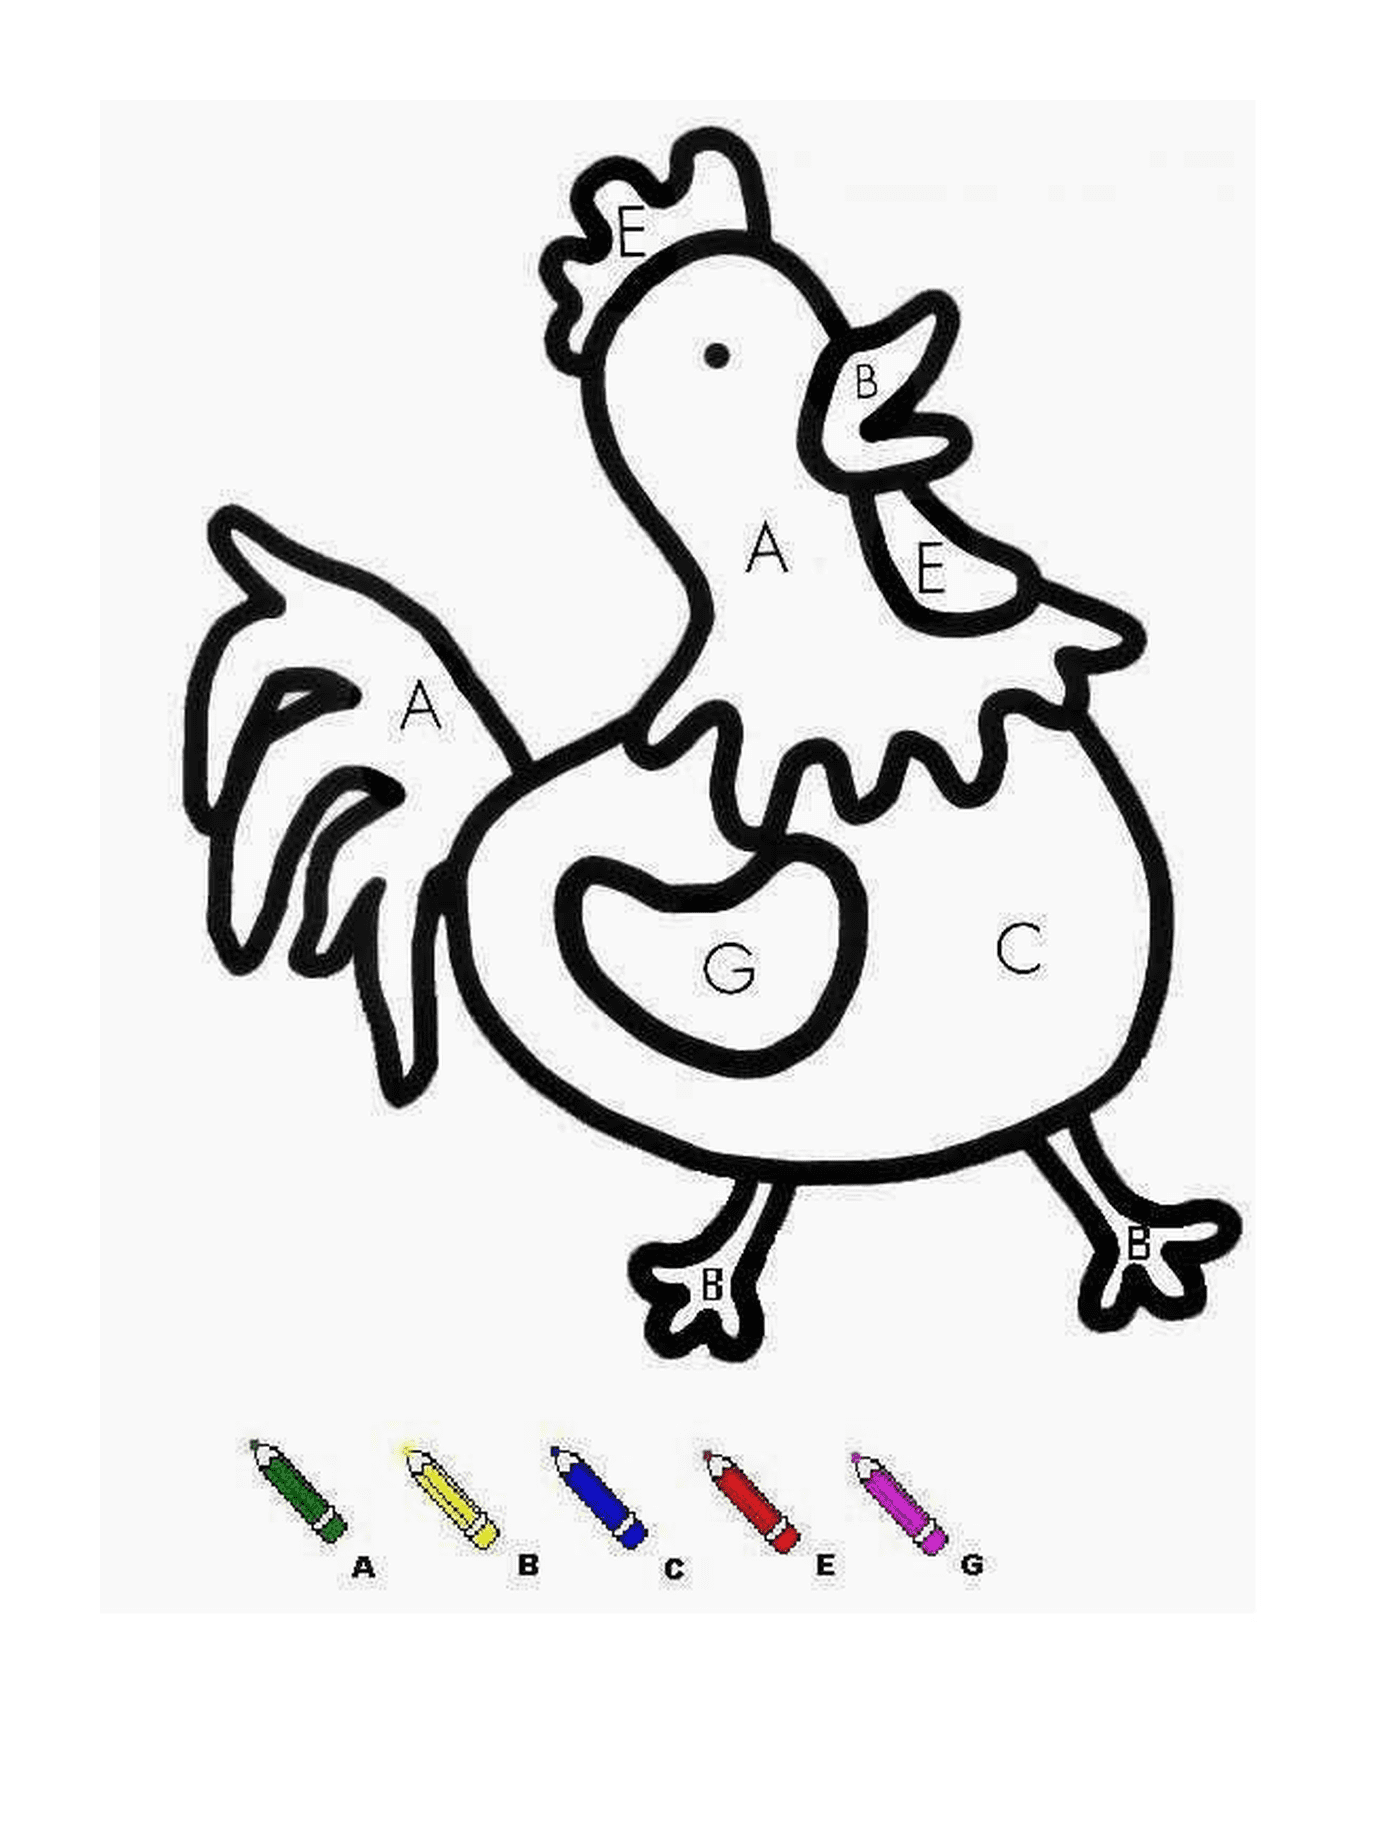  Un pollo con marcadores de colores 